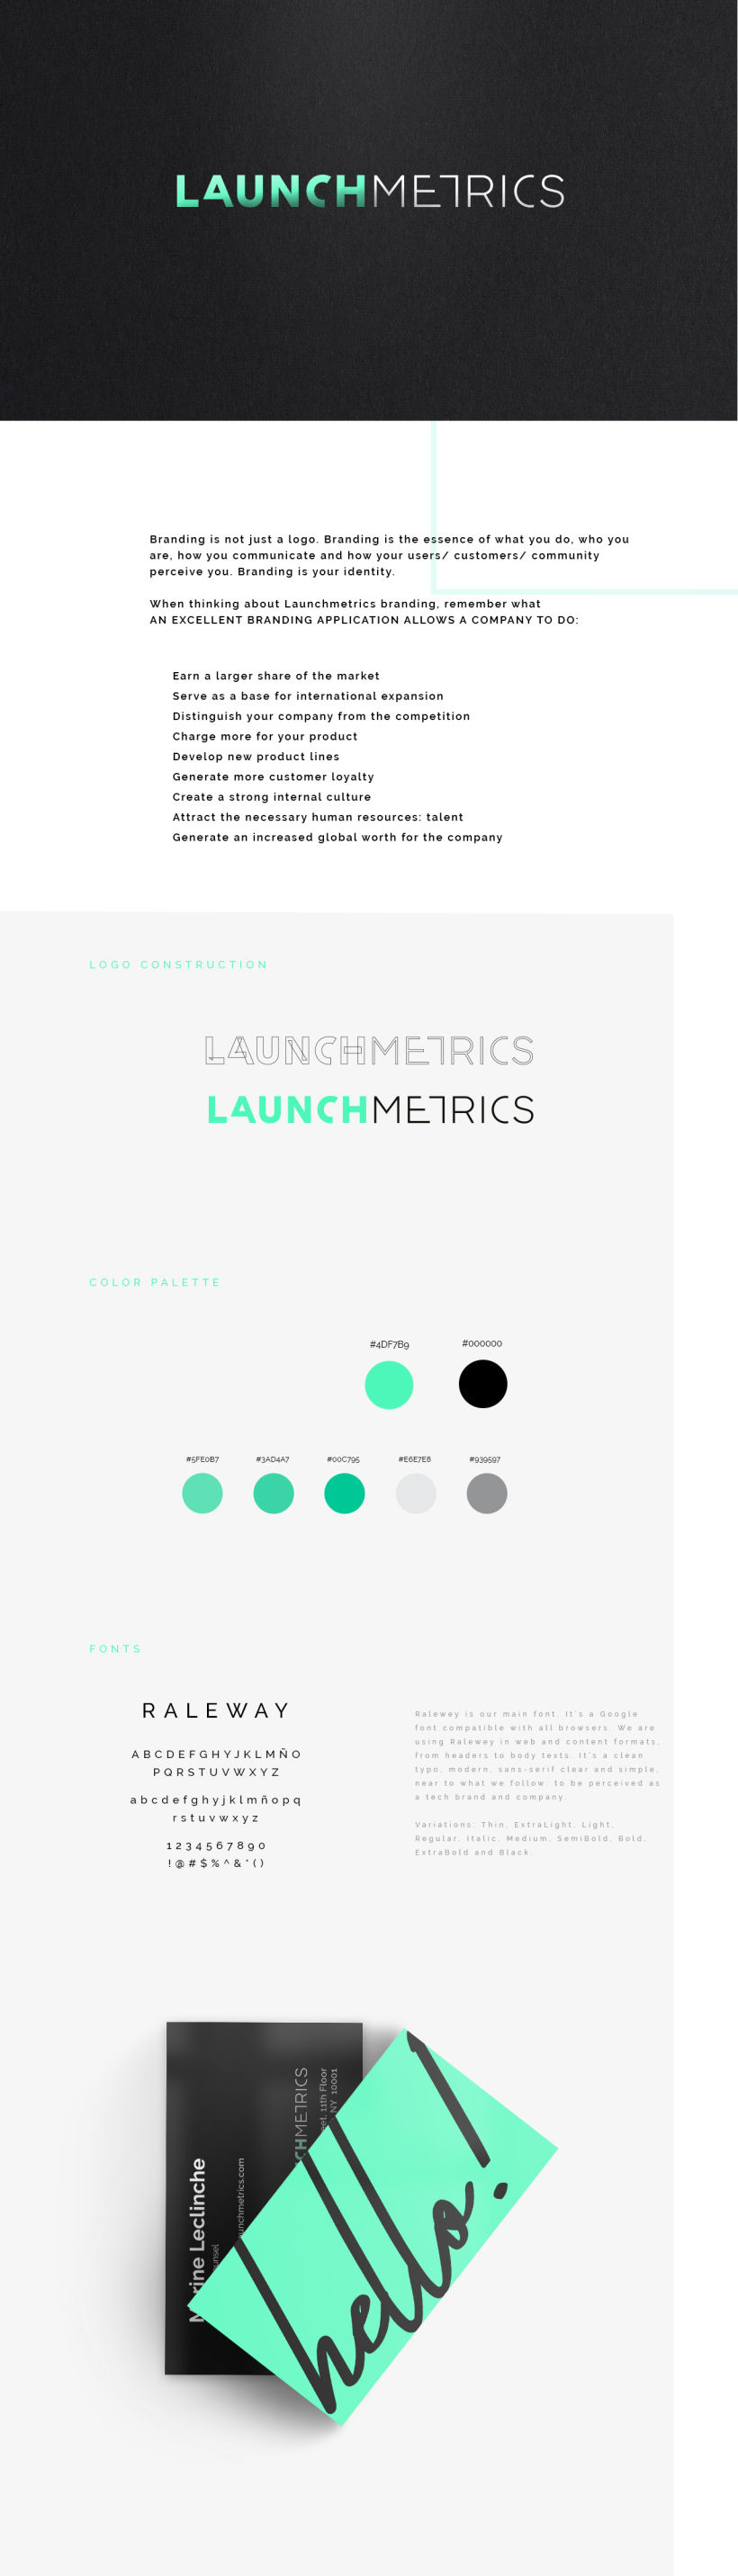 Launchmetrics Brand Identity 0